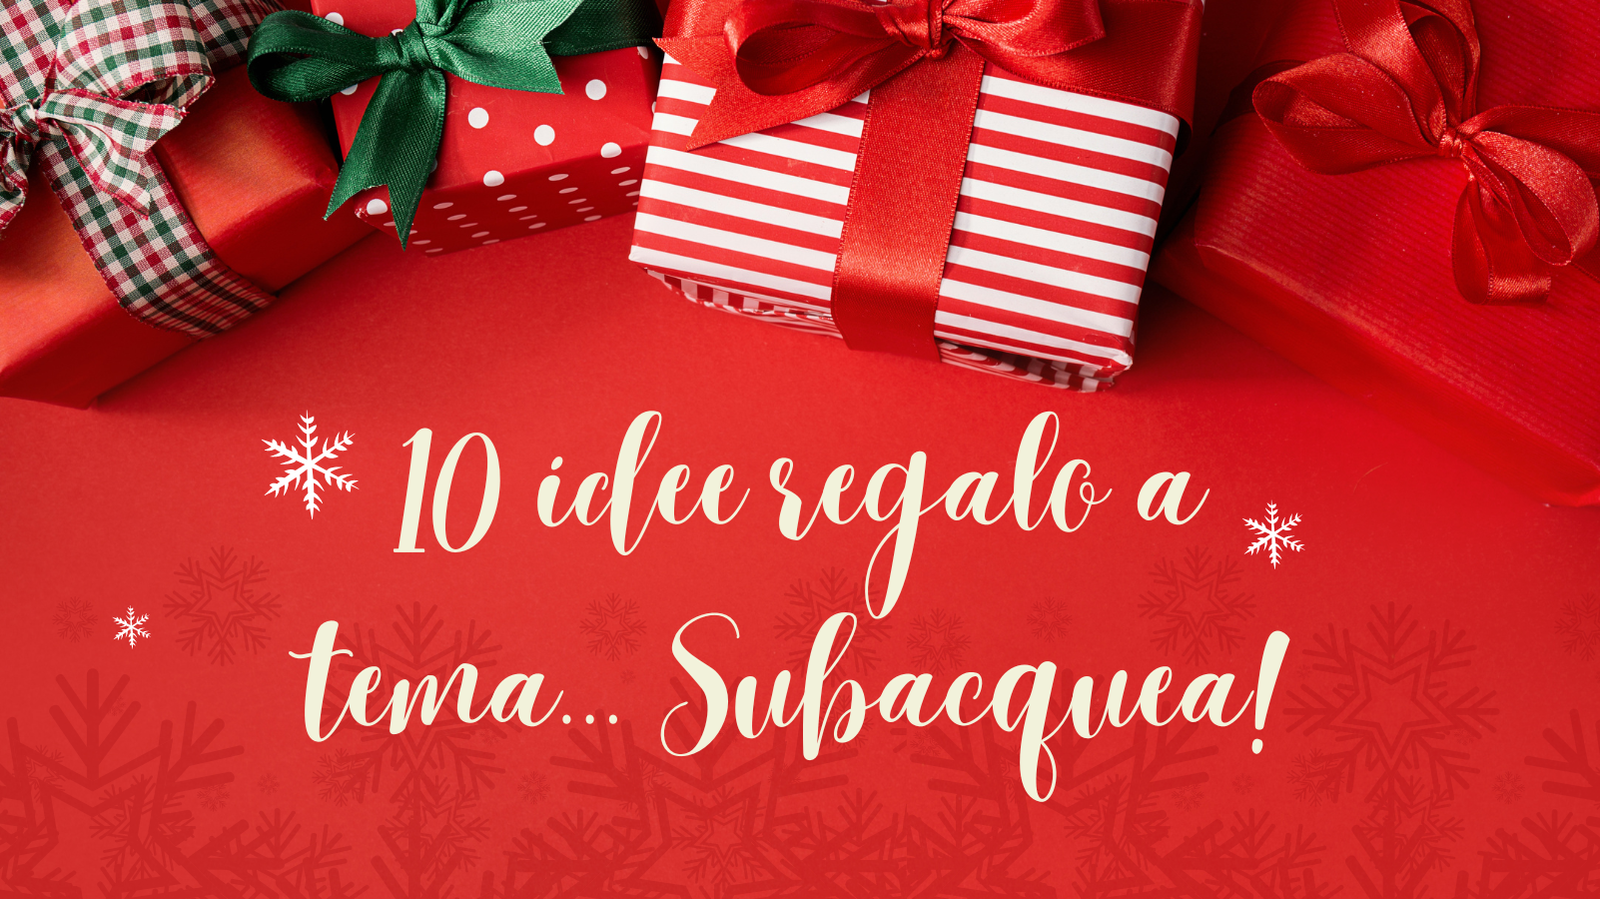 10 idee regalo a tema… Subacquea!